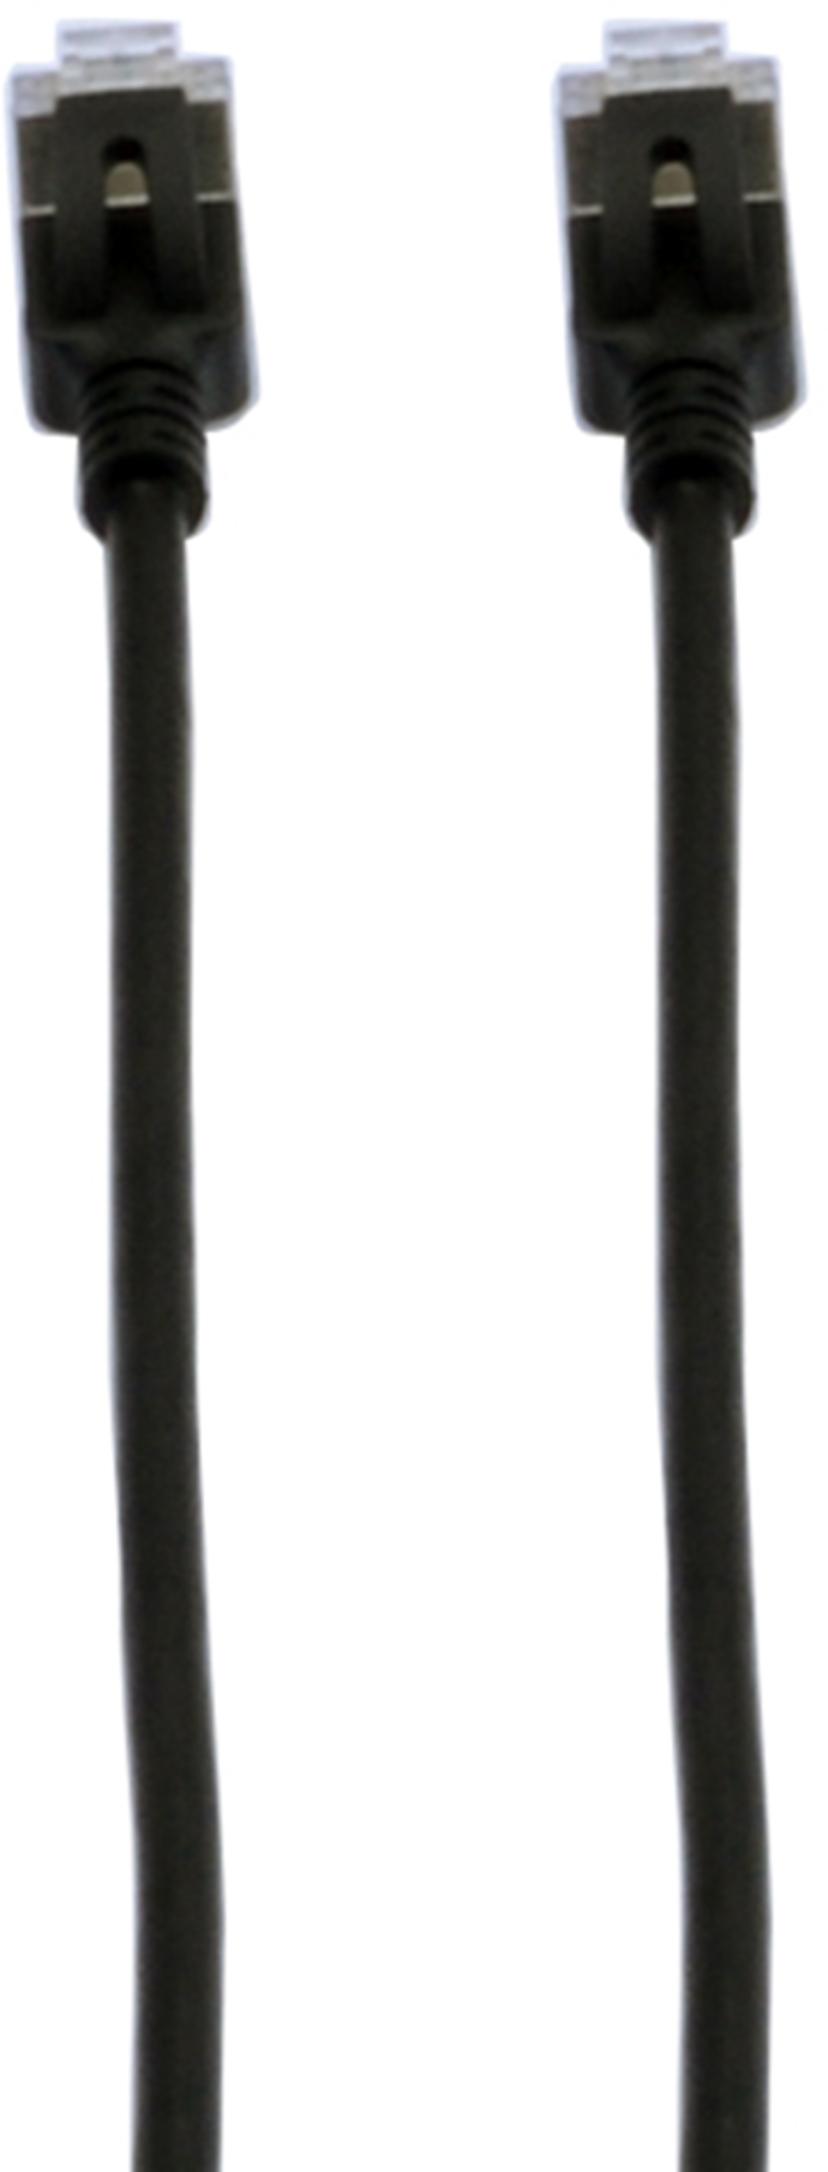 Prokord TP-Cable U/FTP CAT.6A Slim Lszh RJ45 0.5m Black RJ-45 RJ-45 CAT 6a 0.5m Musta